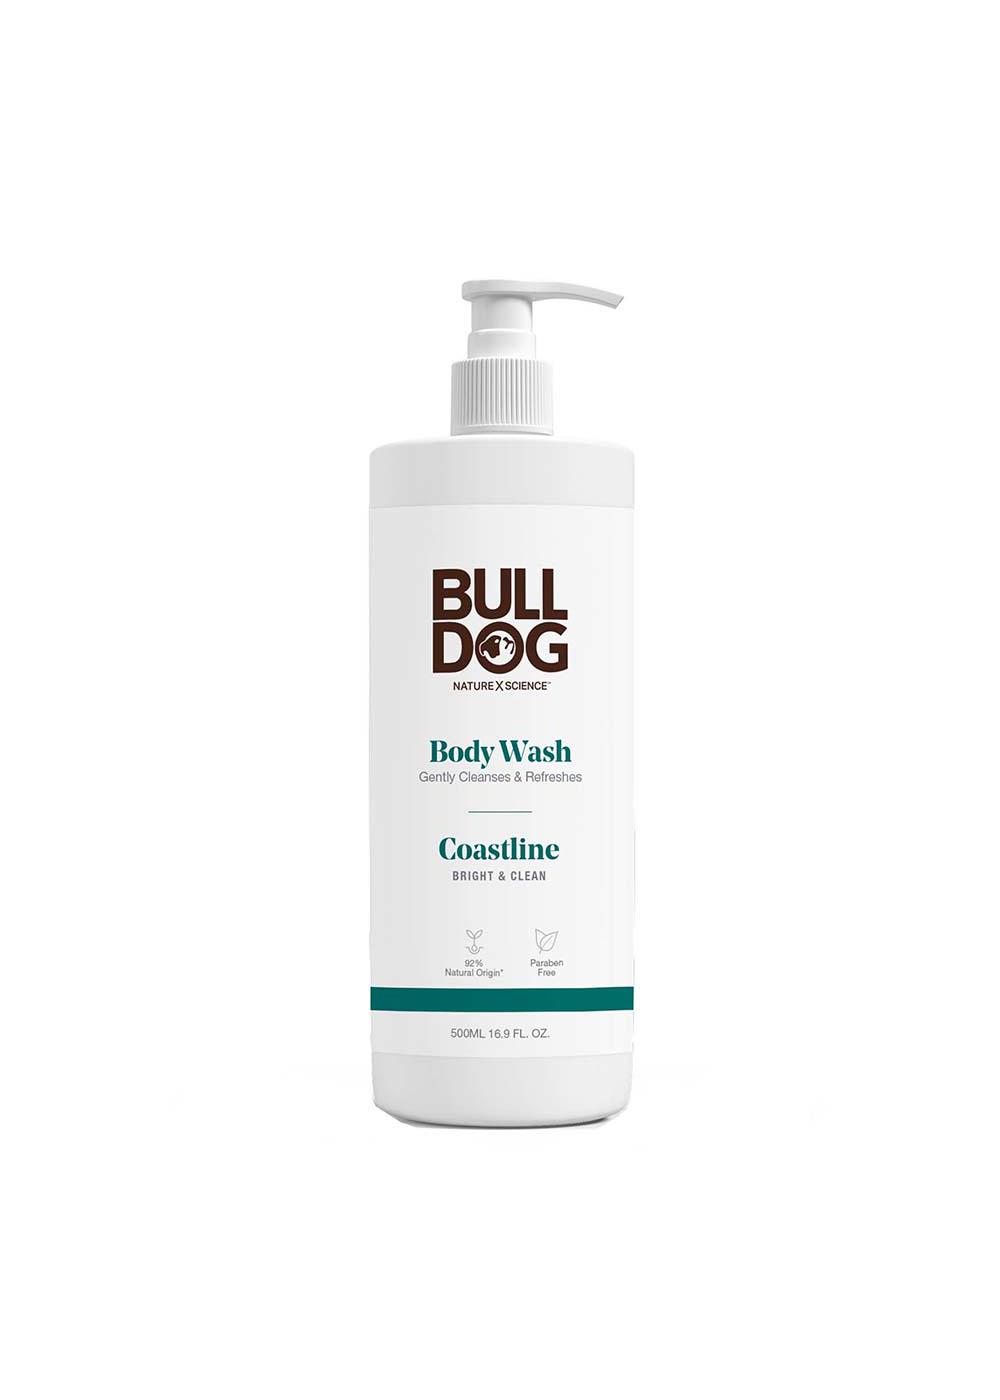 Bulldog Body Wash - Bright & Clean Coastline; image 1 of 7